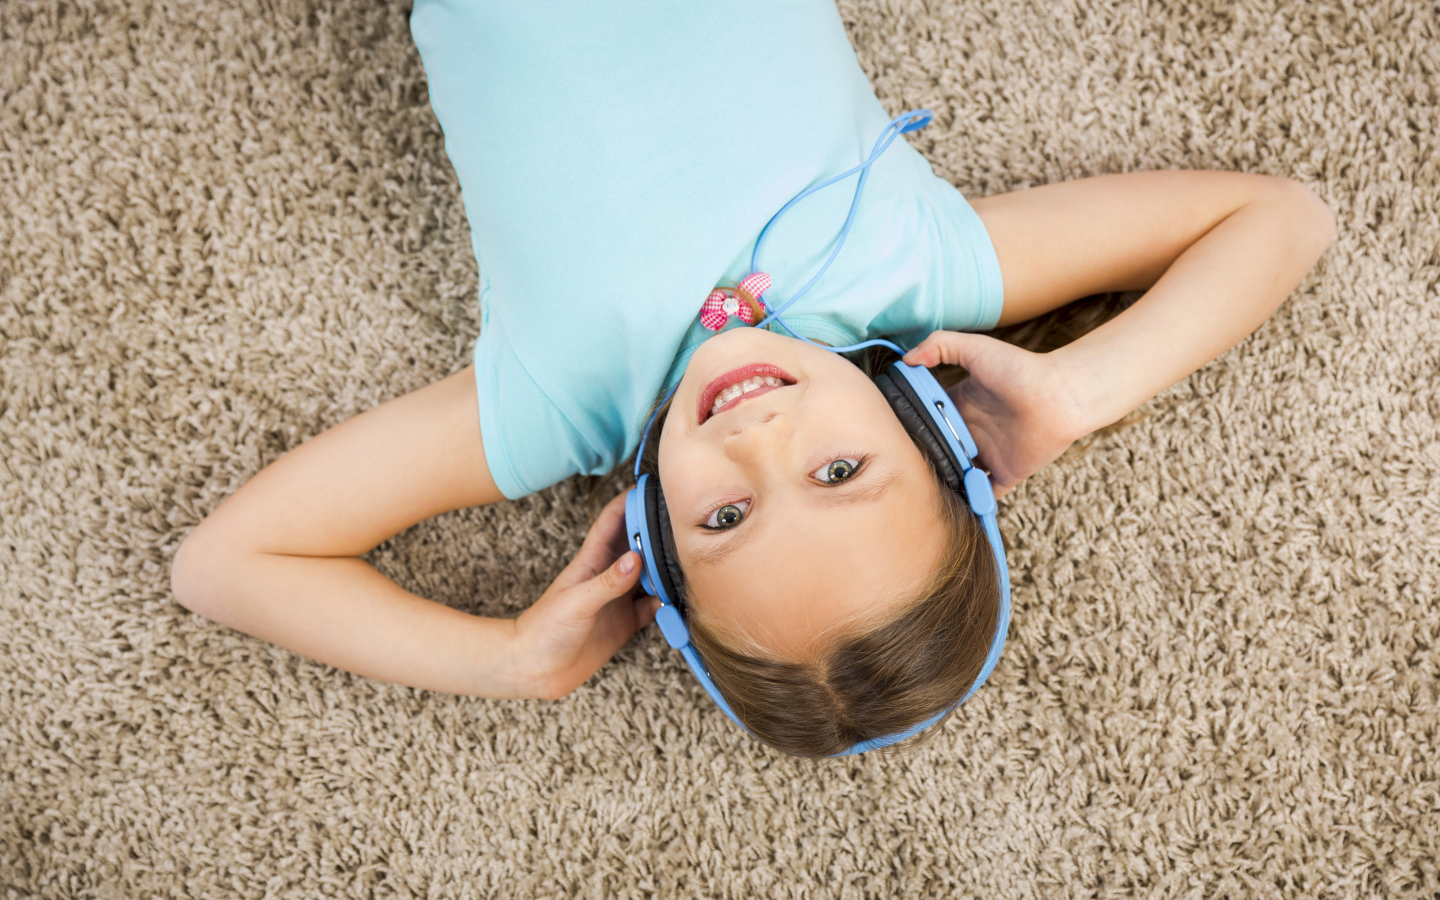 Smiling girl in big blue headphones